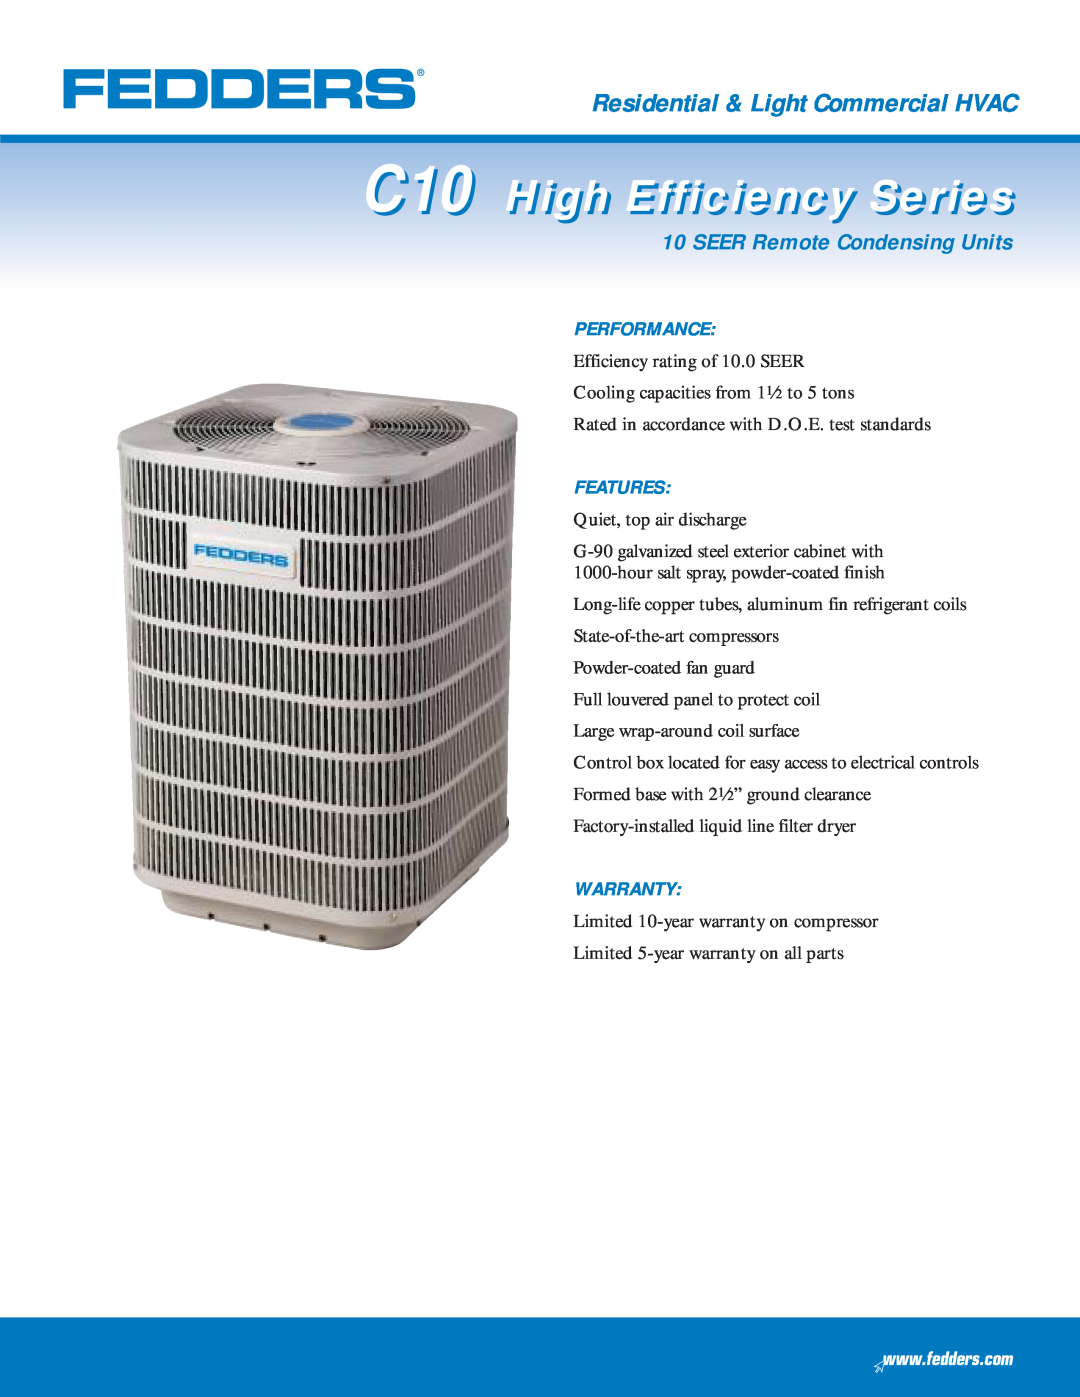 Fedders warranty C10 High Efficiency Series, Residential & Light Commercial HVAC, SEER Remote Condensing Units 